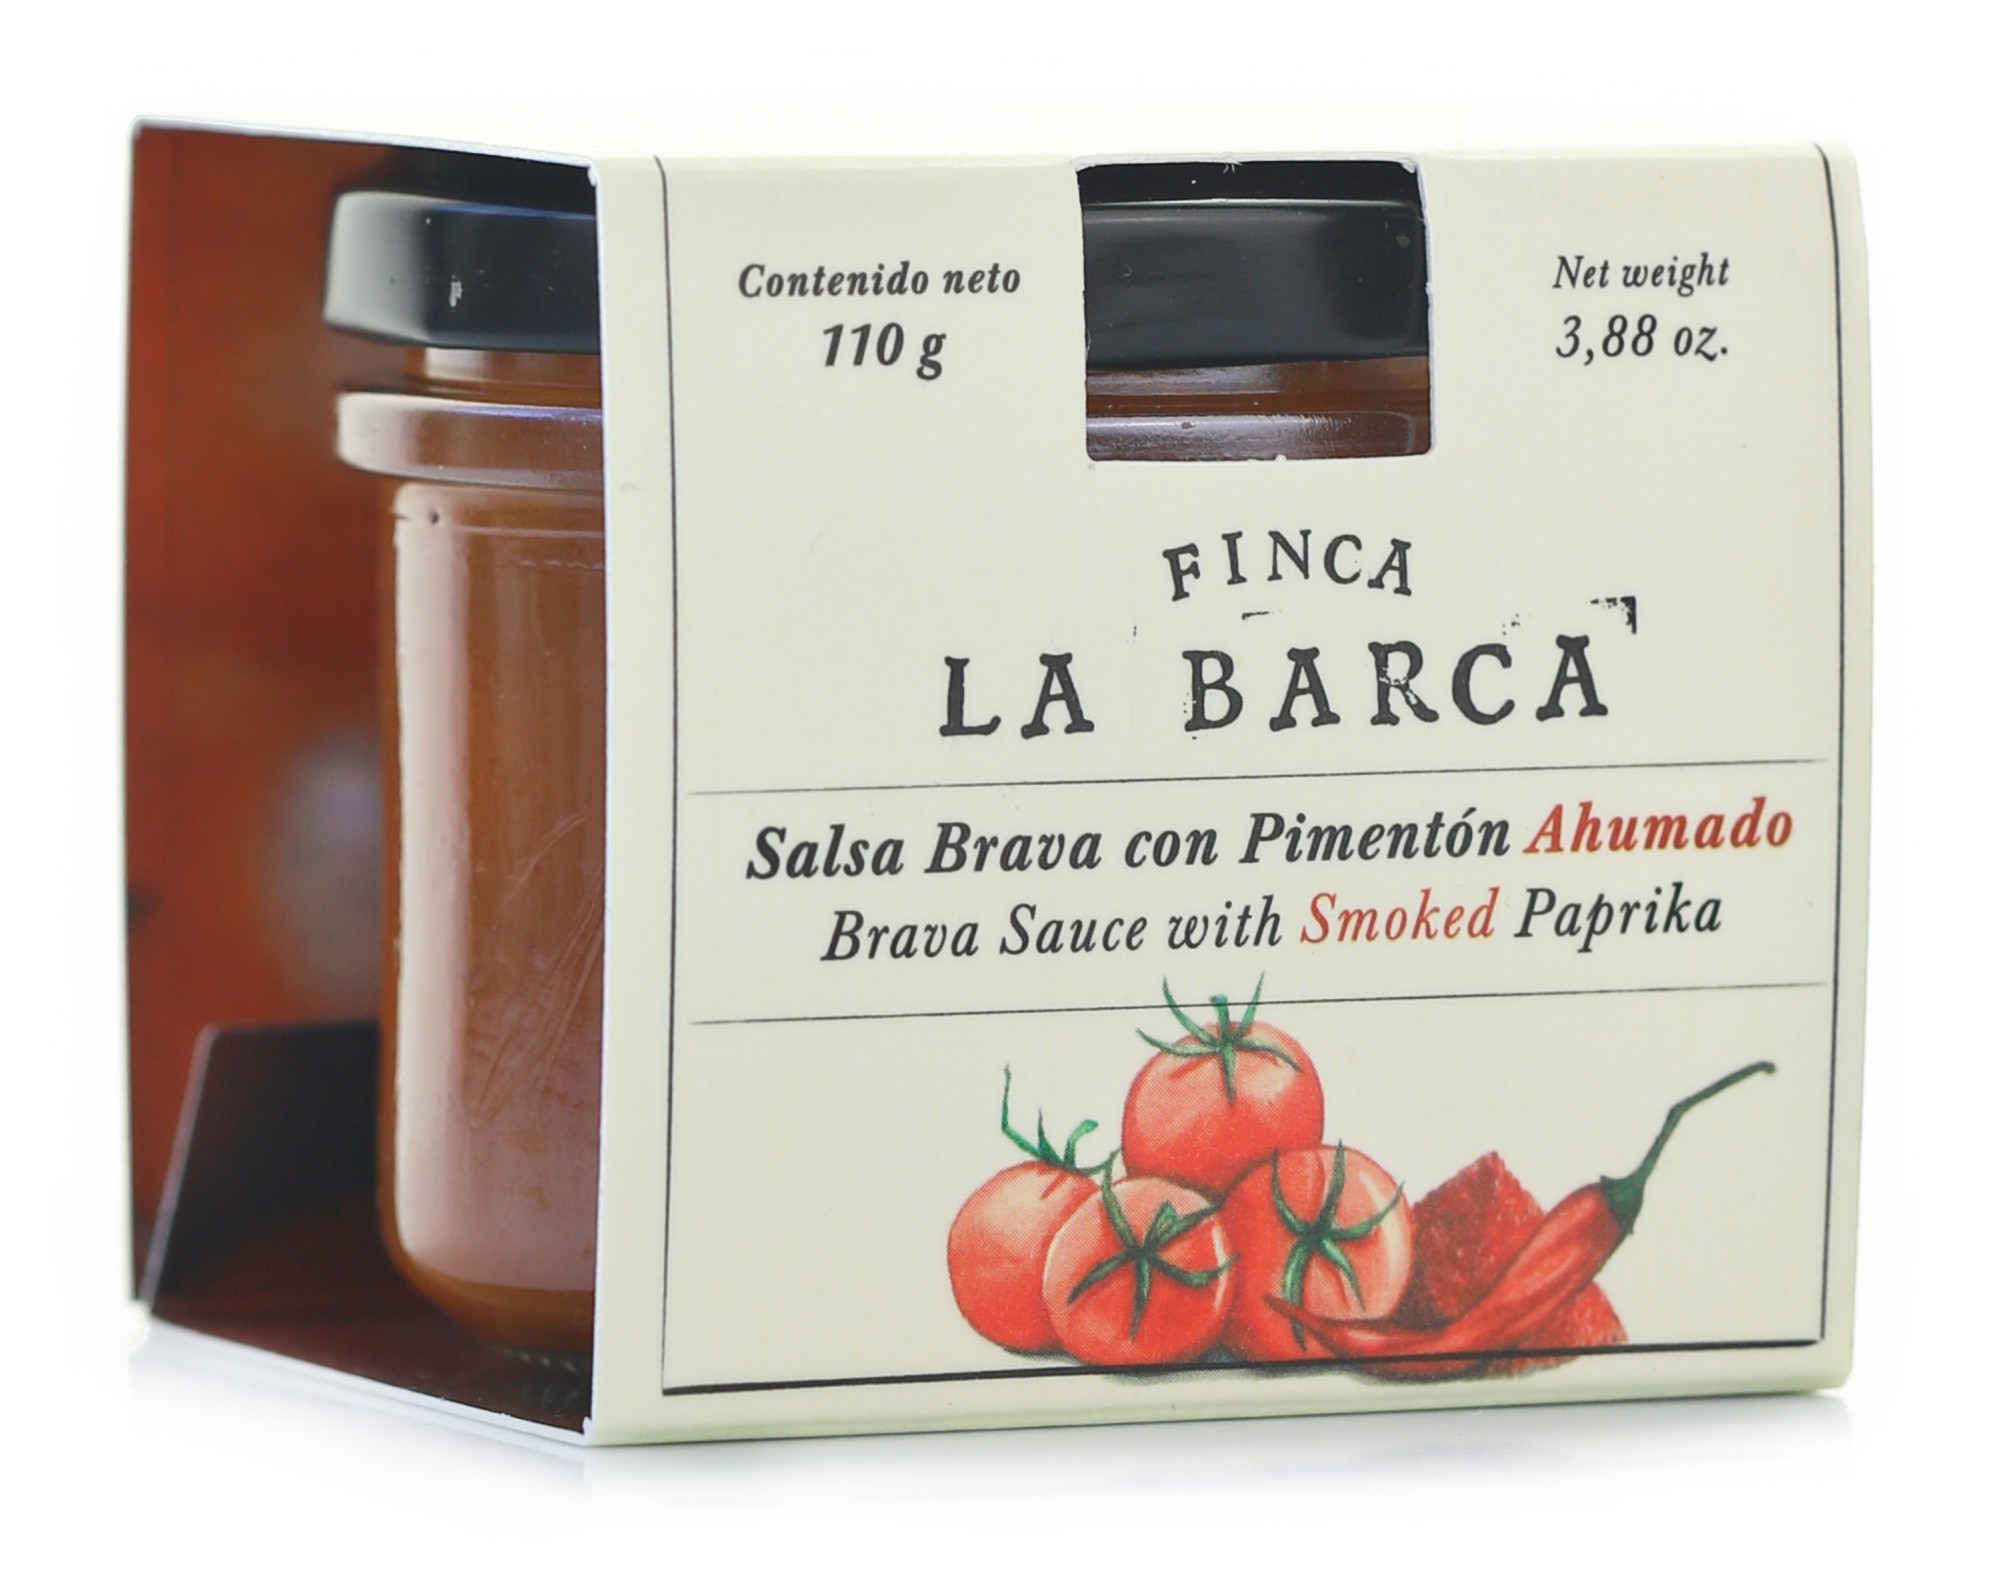 Brava Sauce with Smoked Paprika "Finca La Barca" 110G